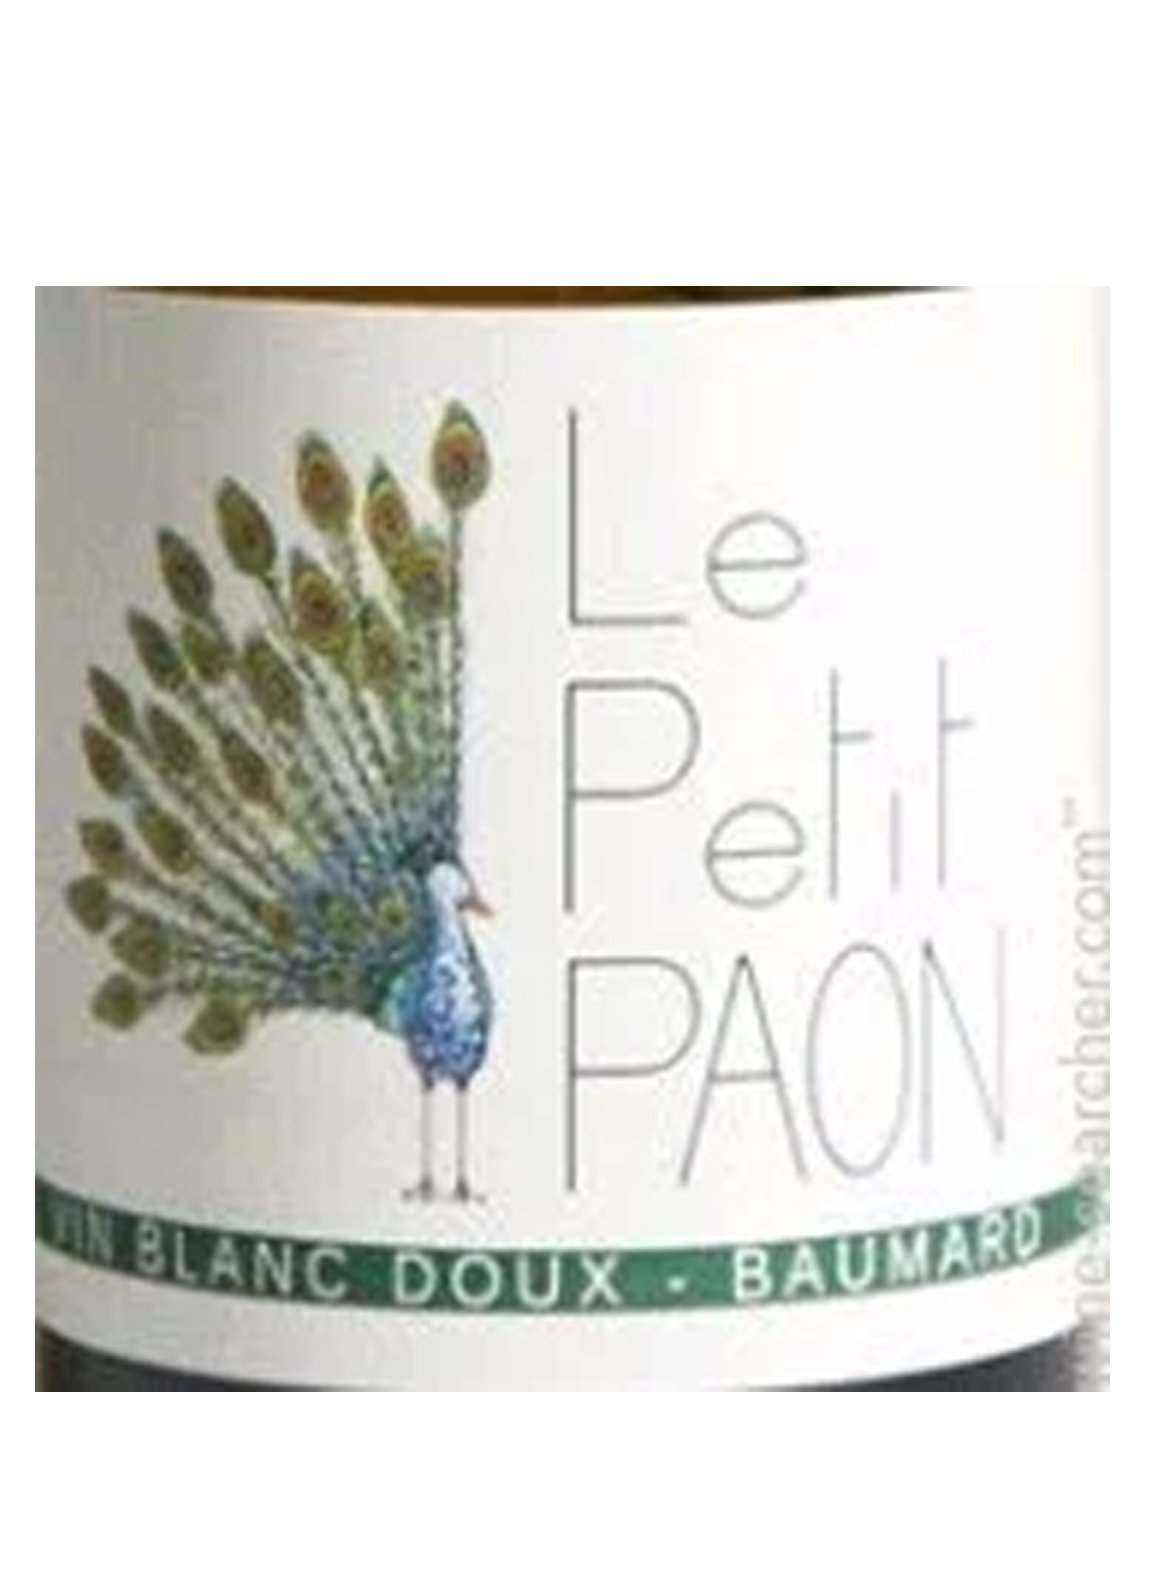 Baumard Petite Paon 16 500 - Wine France White - Liquor Wine Cave